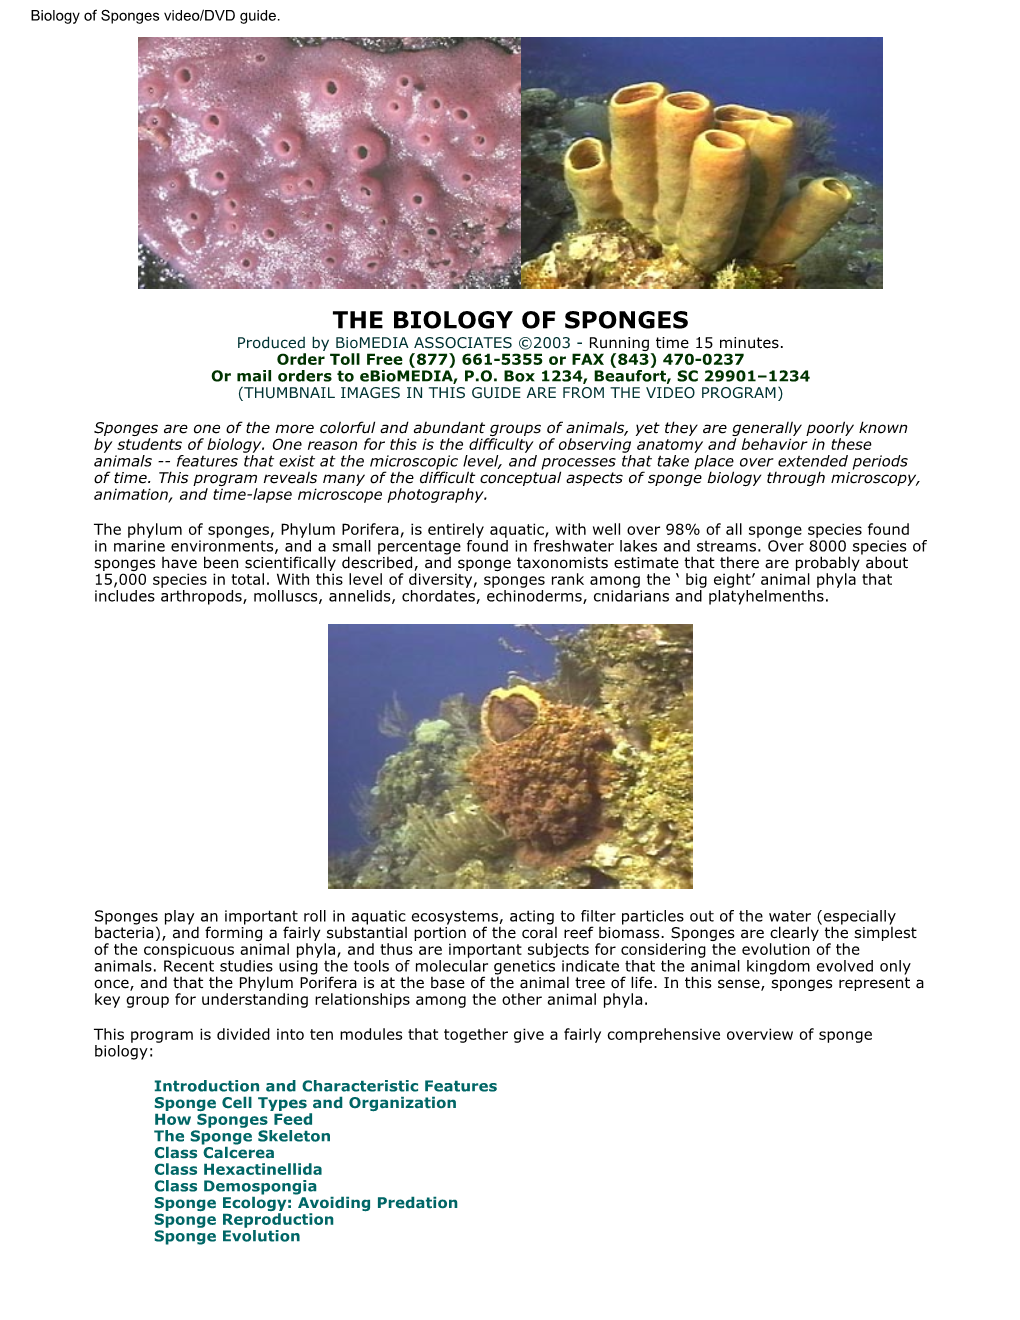 Biology of Sponges Video/DVD Guide